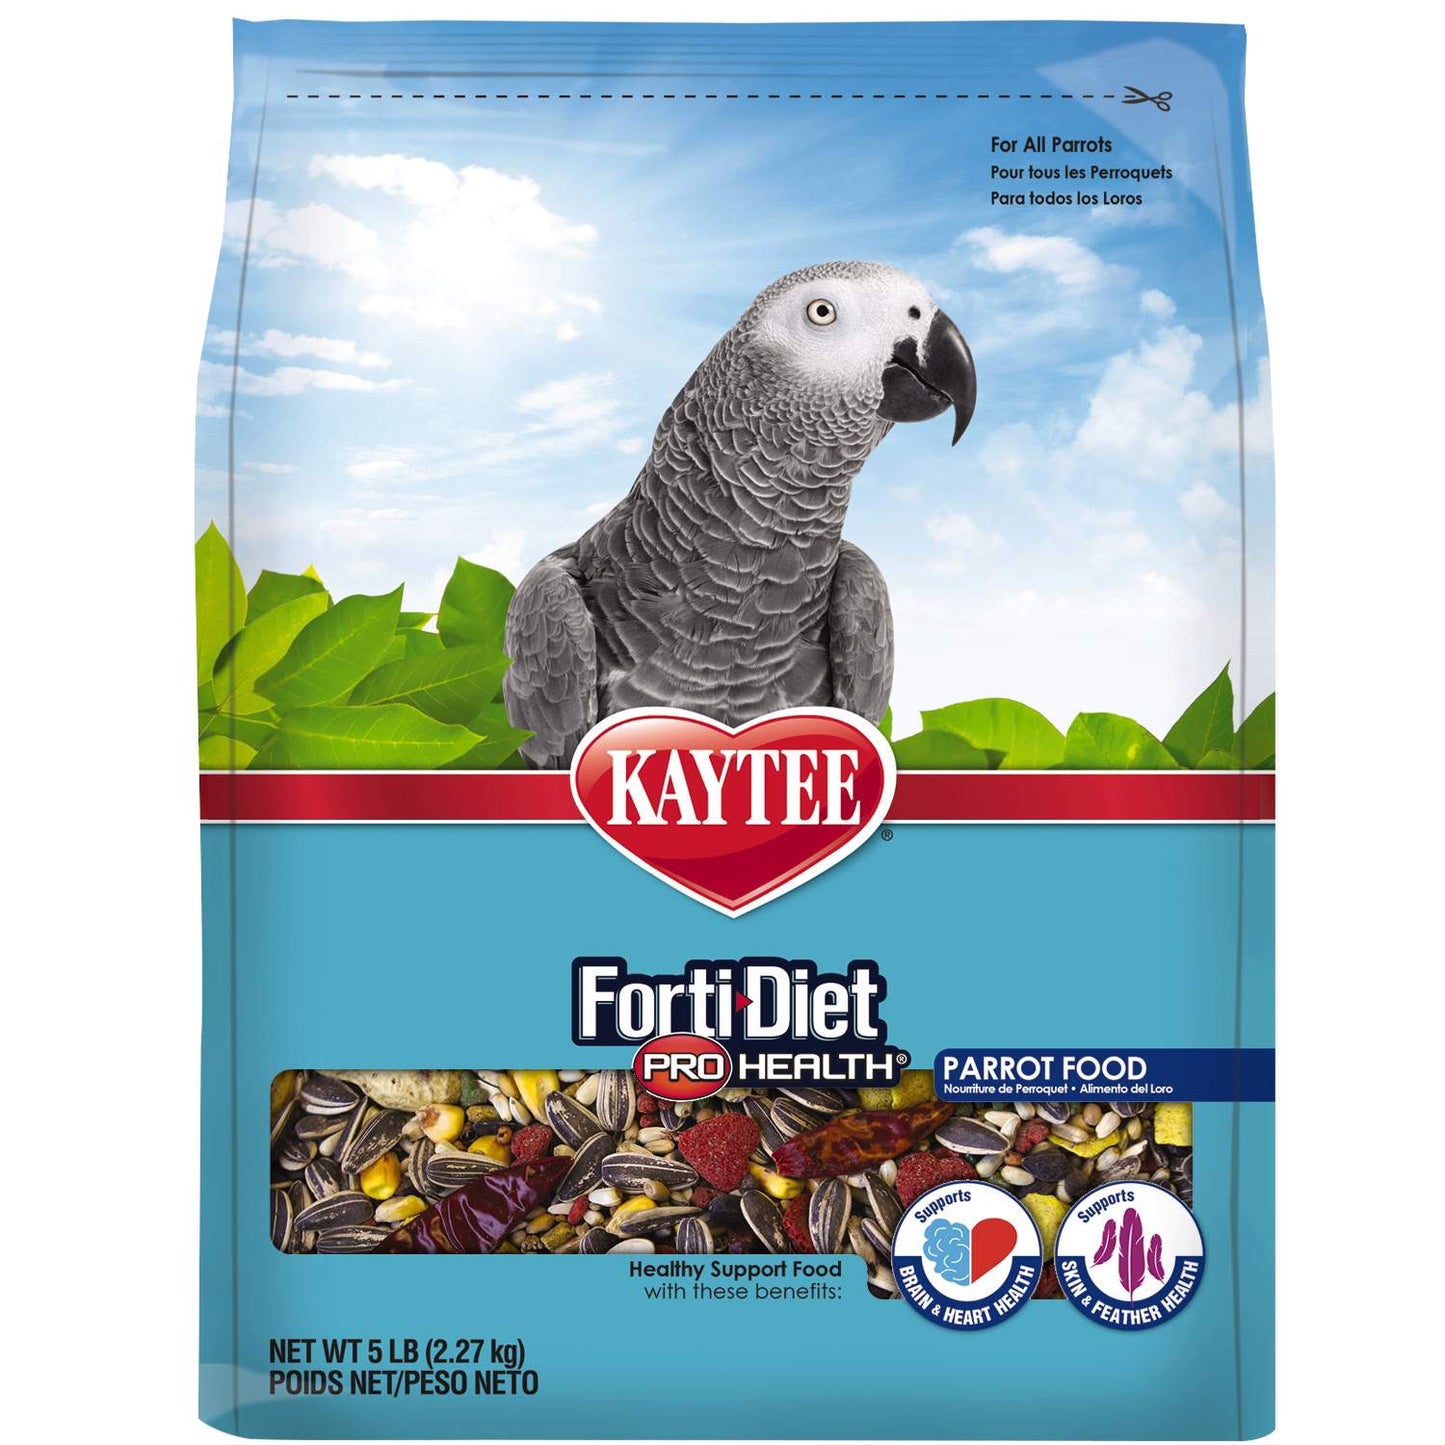 Kaytee Forti-Diet Pro Health Parrot Food, 5-lb Bag